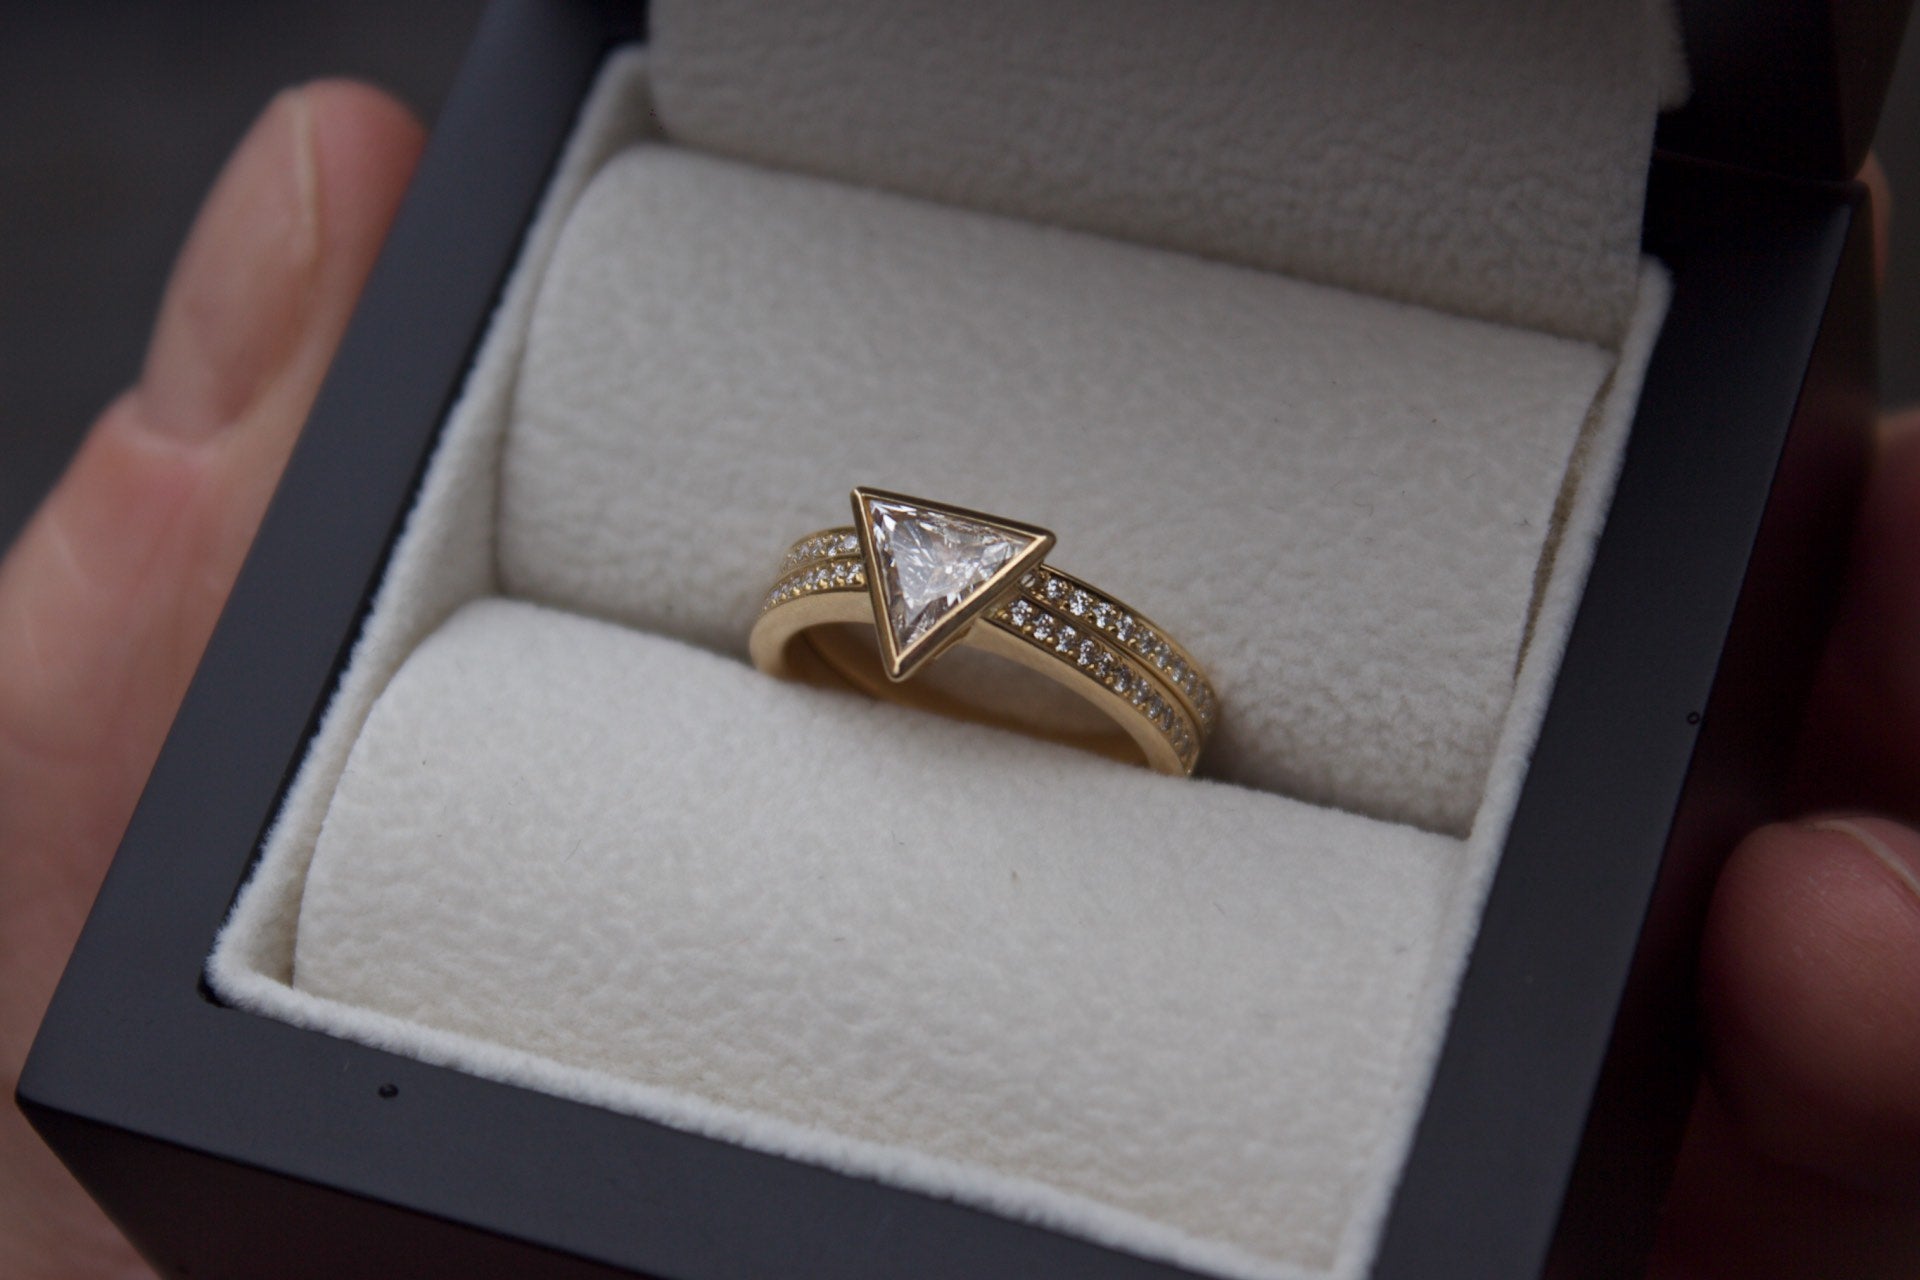 Moira Patience Fine Jewellery Bespoke Commission Handmade Diamond Wedding Band and Triangle Diamond Engagement Ring in Edinburgh